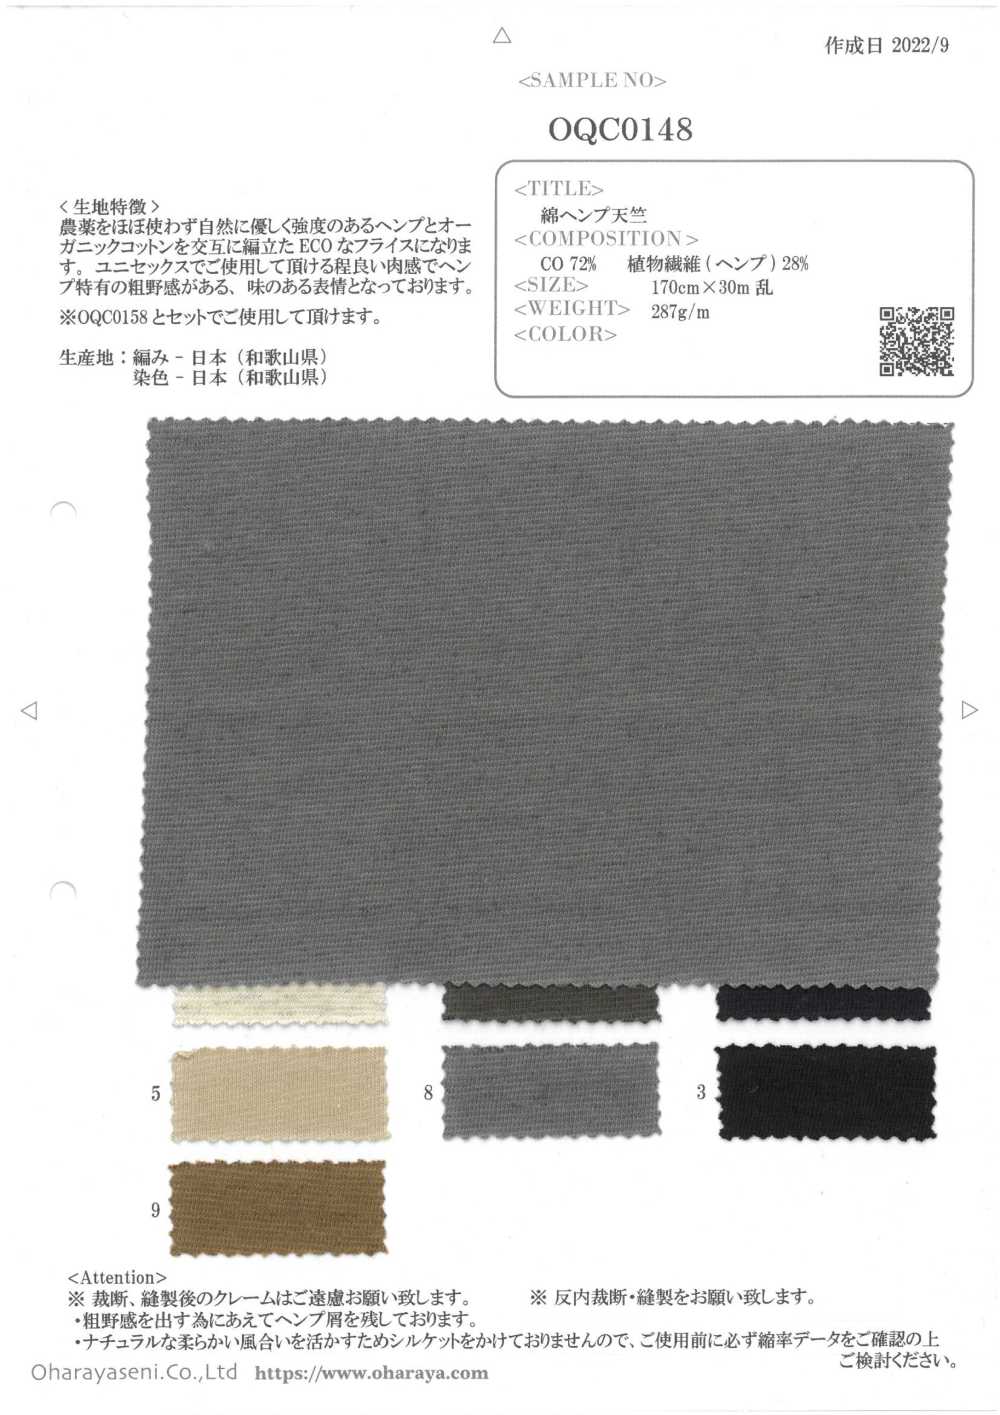 OQC0148 Cotton Hemp Jersey[Textile / Fabric] Oharayaseni